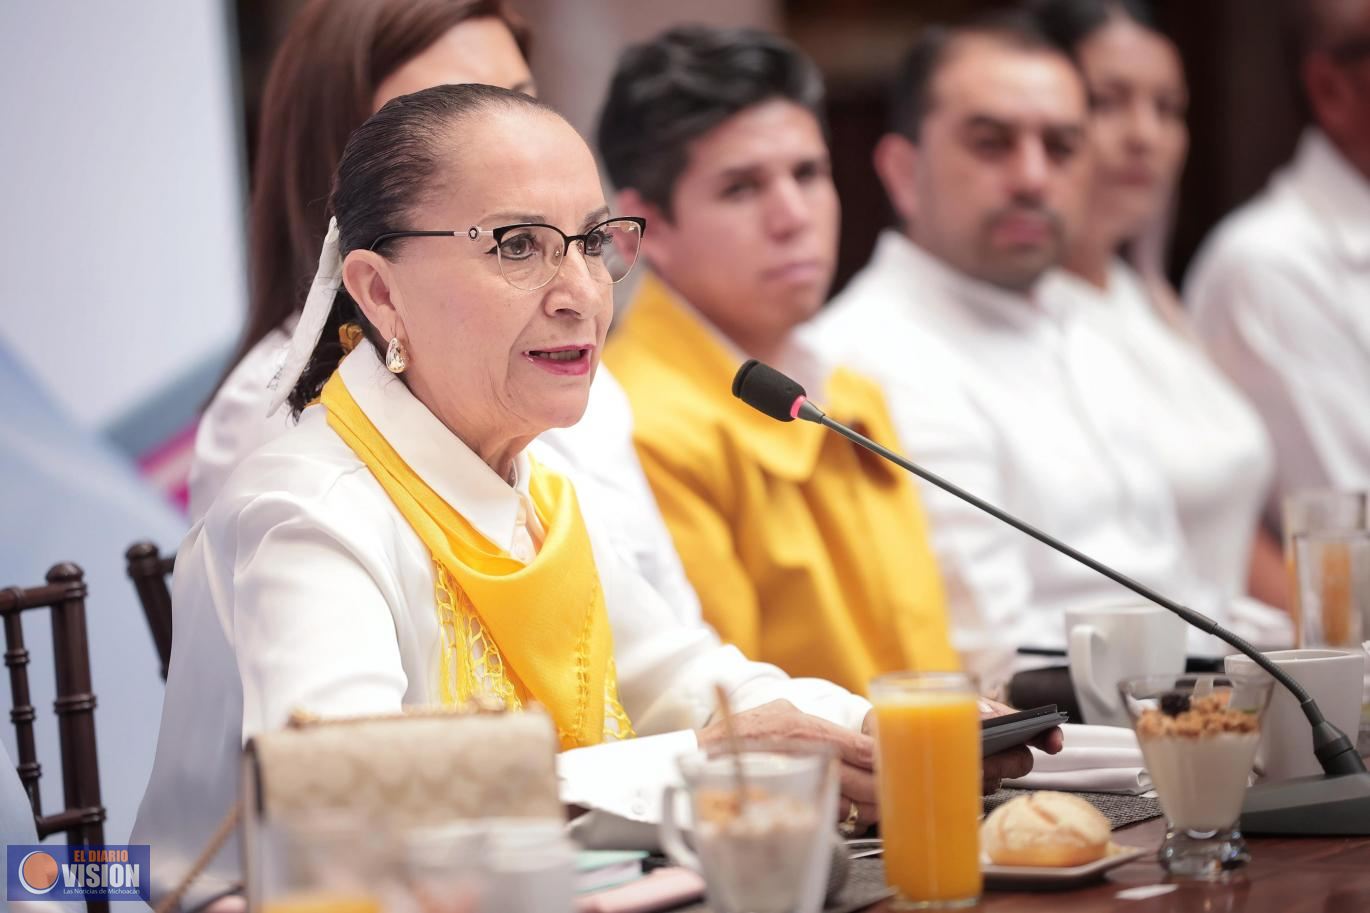 Convoca Julieta Gallardo a Pacto de Civilidad al arrancar campaña como candidata a diputada local